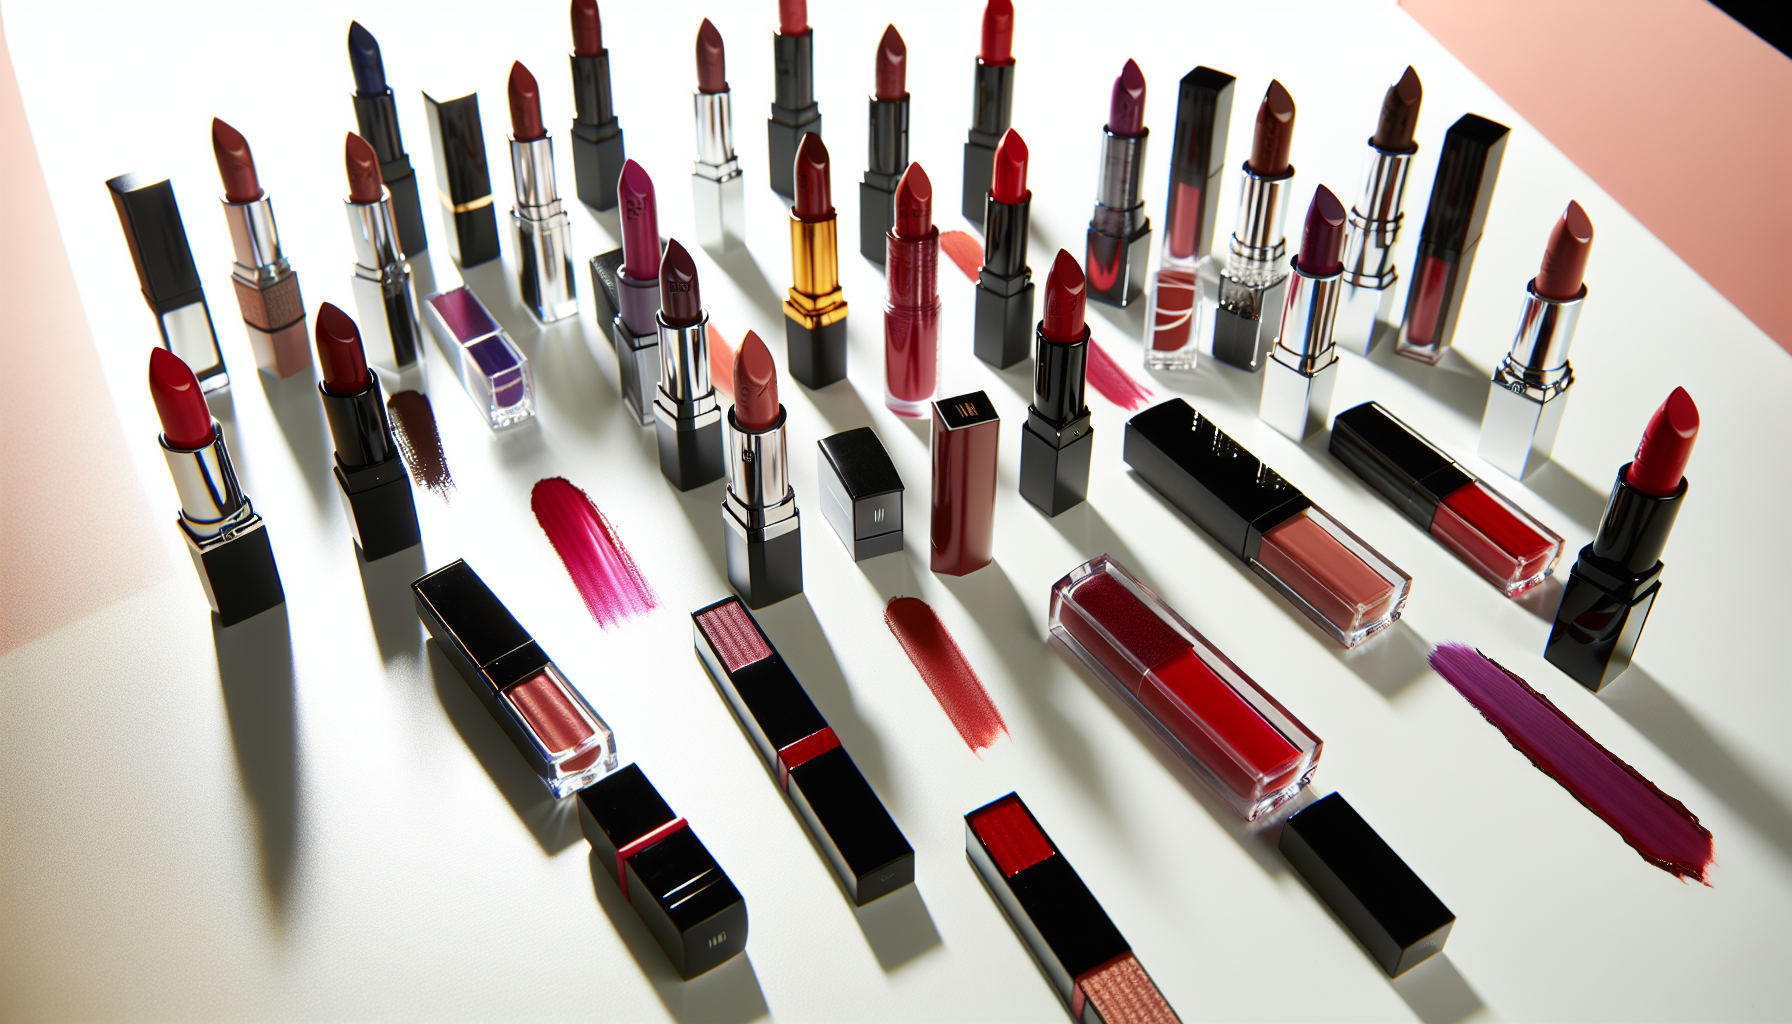 Variety of vinyl lipstick shades